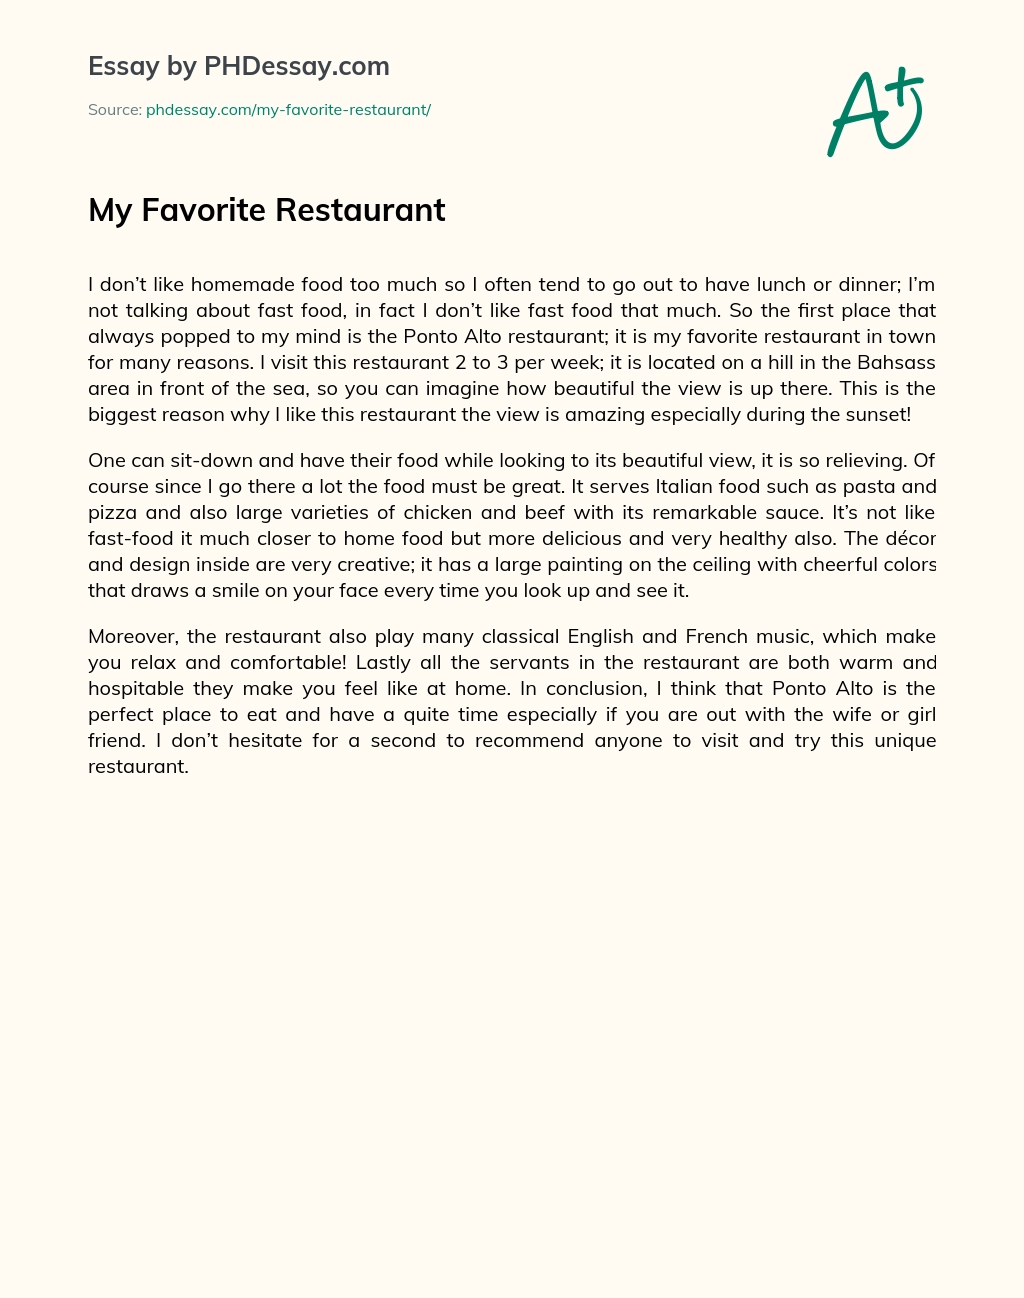 describe your favorite restaurant essay